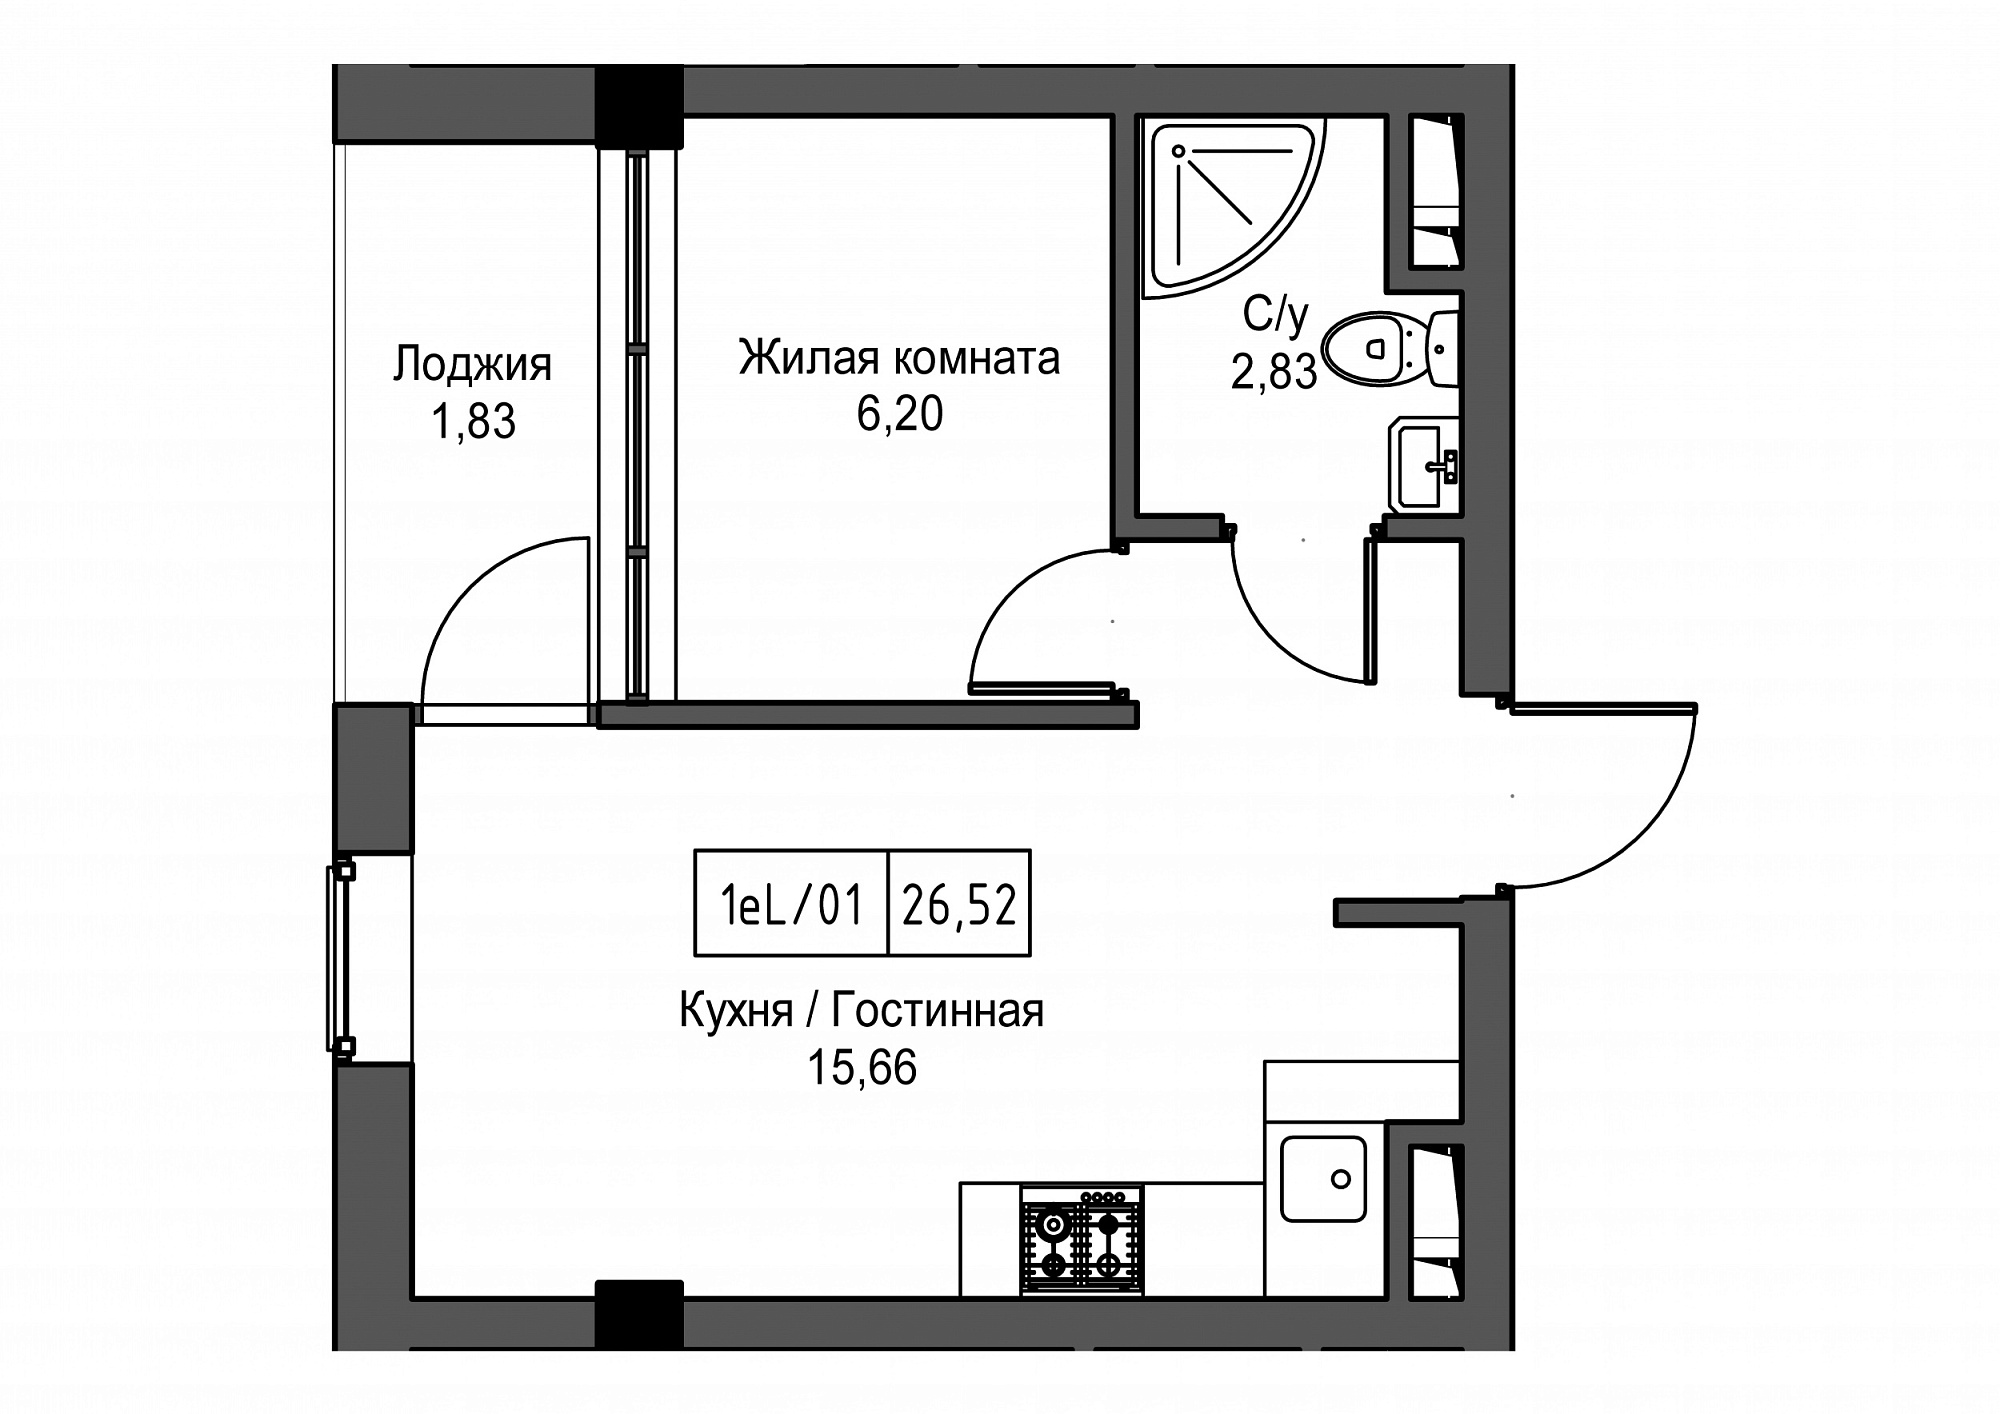 Planning 1-rm flats area 26.52m2, UM-002-02/0099.